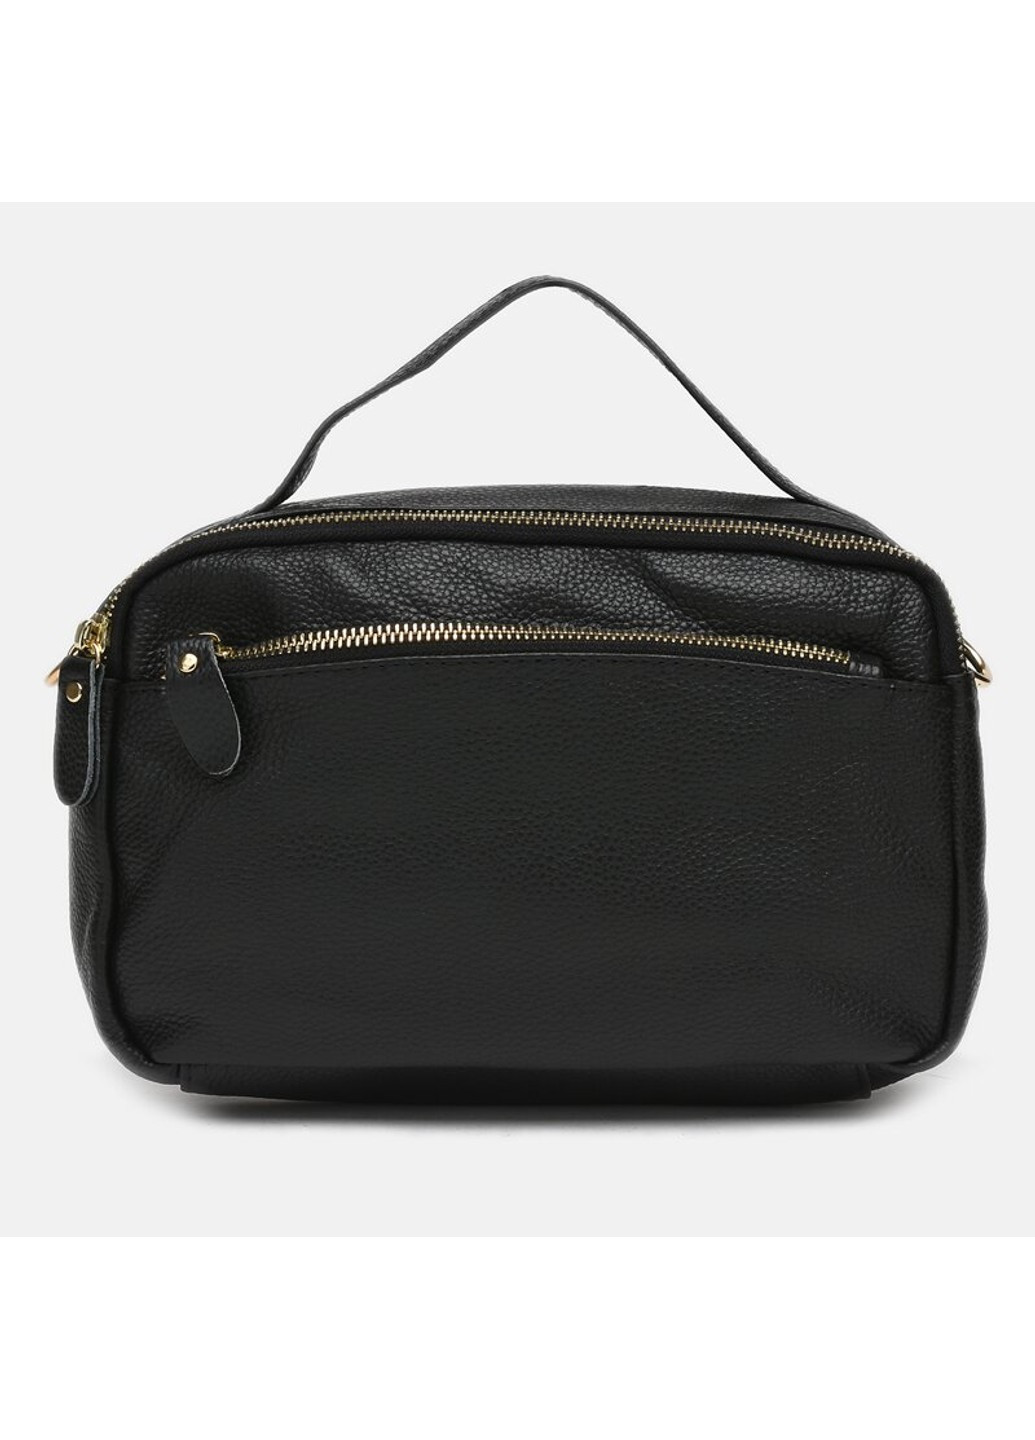 Женская кожаная сумка K11189-black Keizer (266144077)